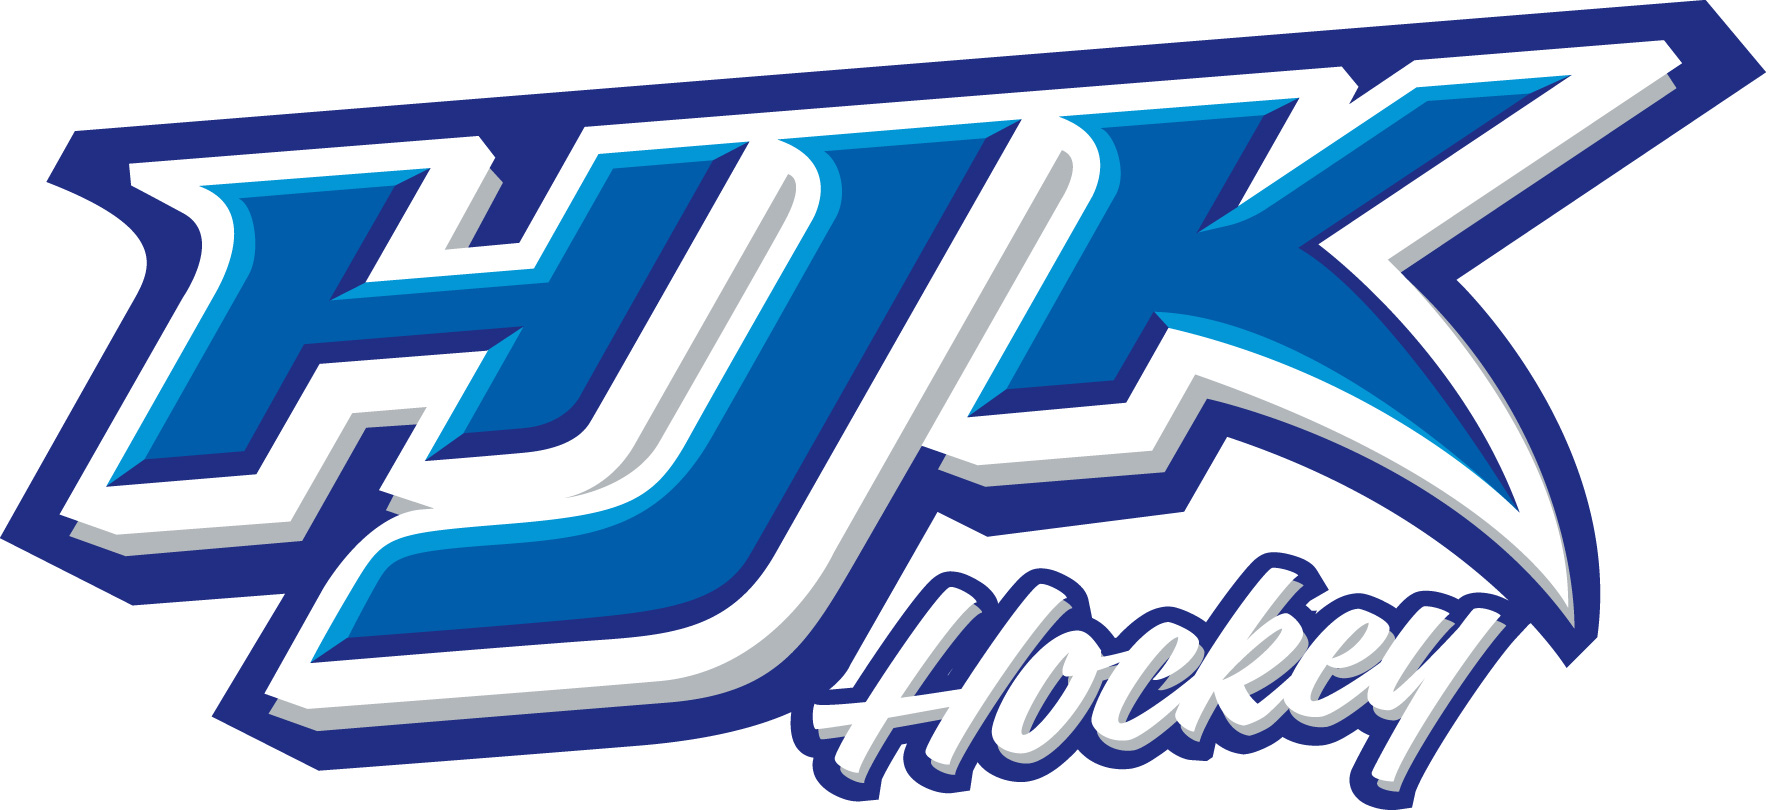 hjk_logo_royal_hockey2.jpg